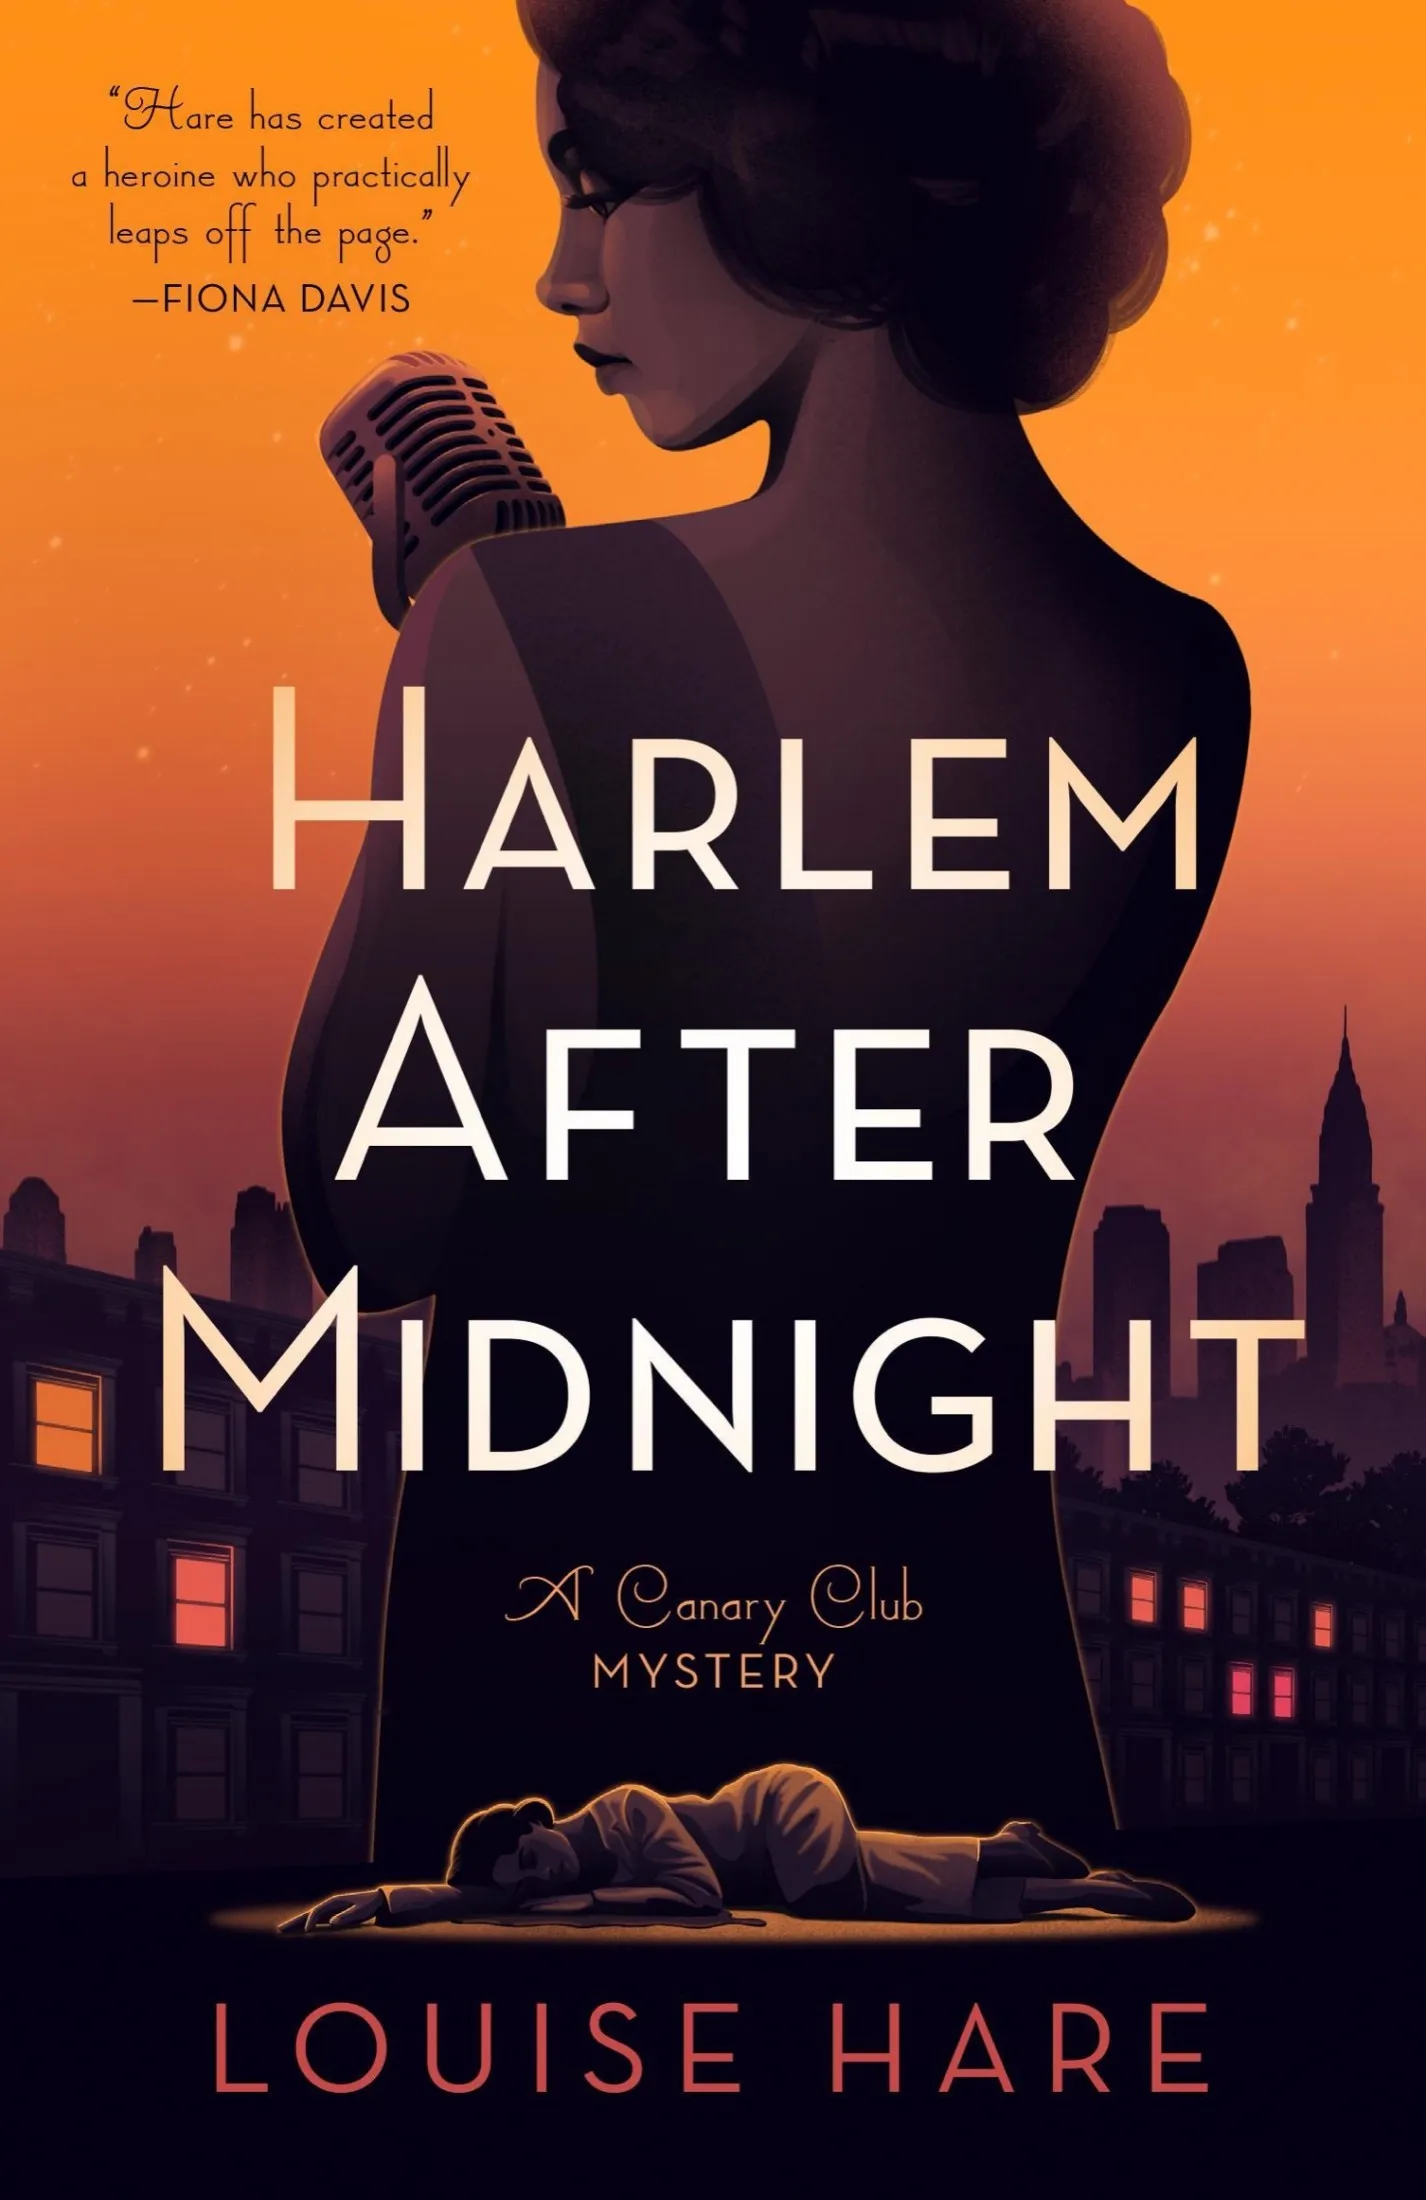 Harlem After Midnight (A Canary Club Mystery #2)